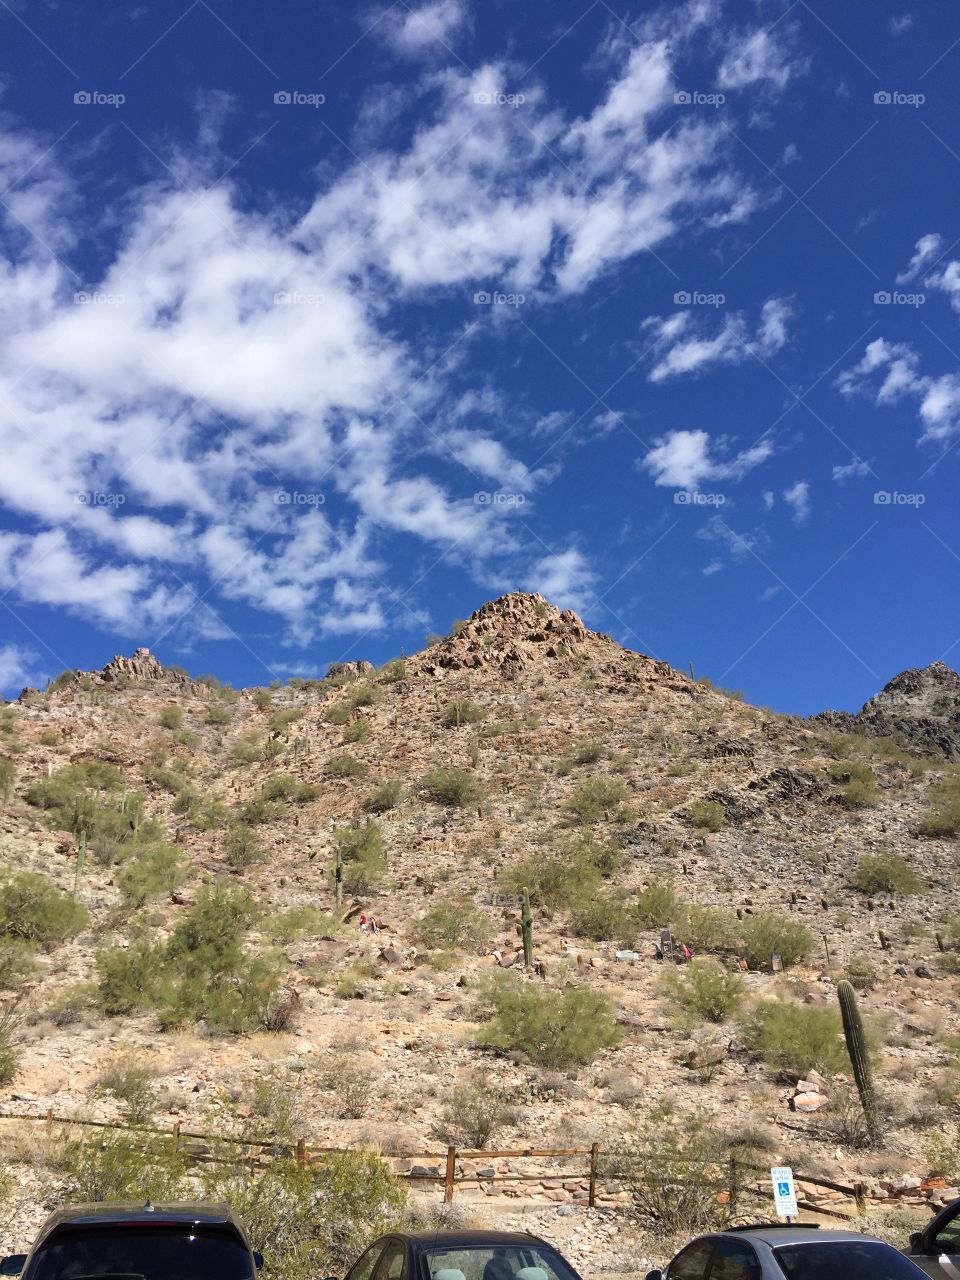 Arizona. Phoenix Mountains. 